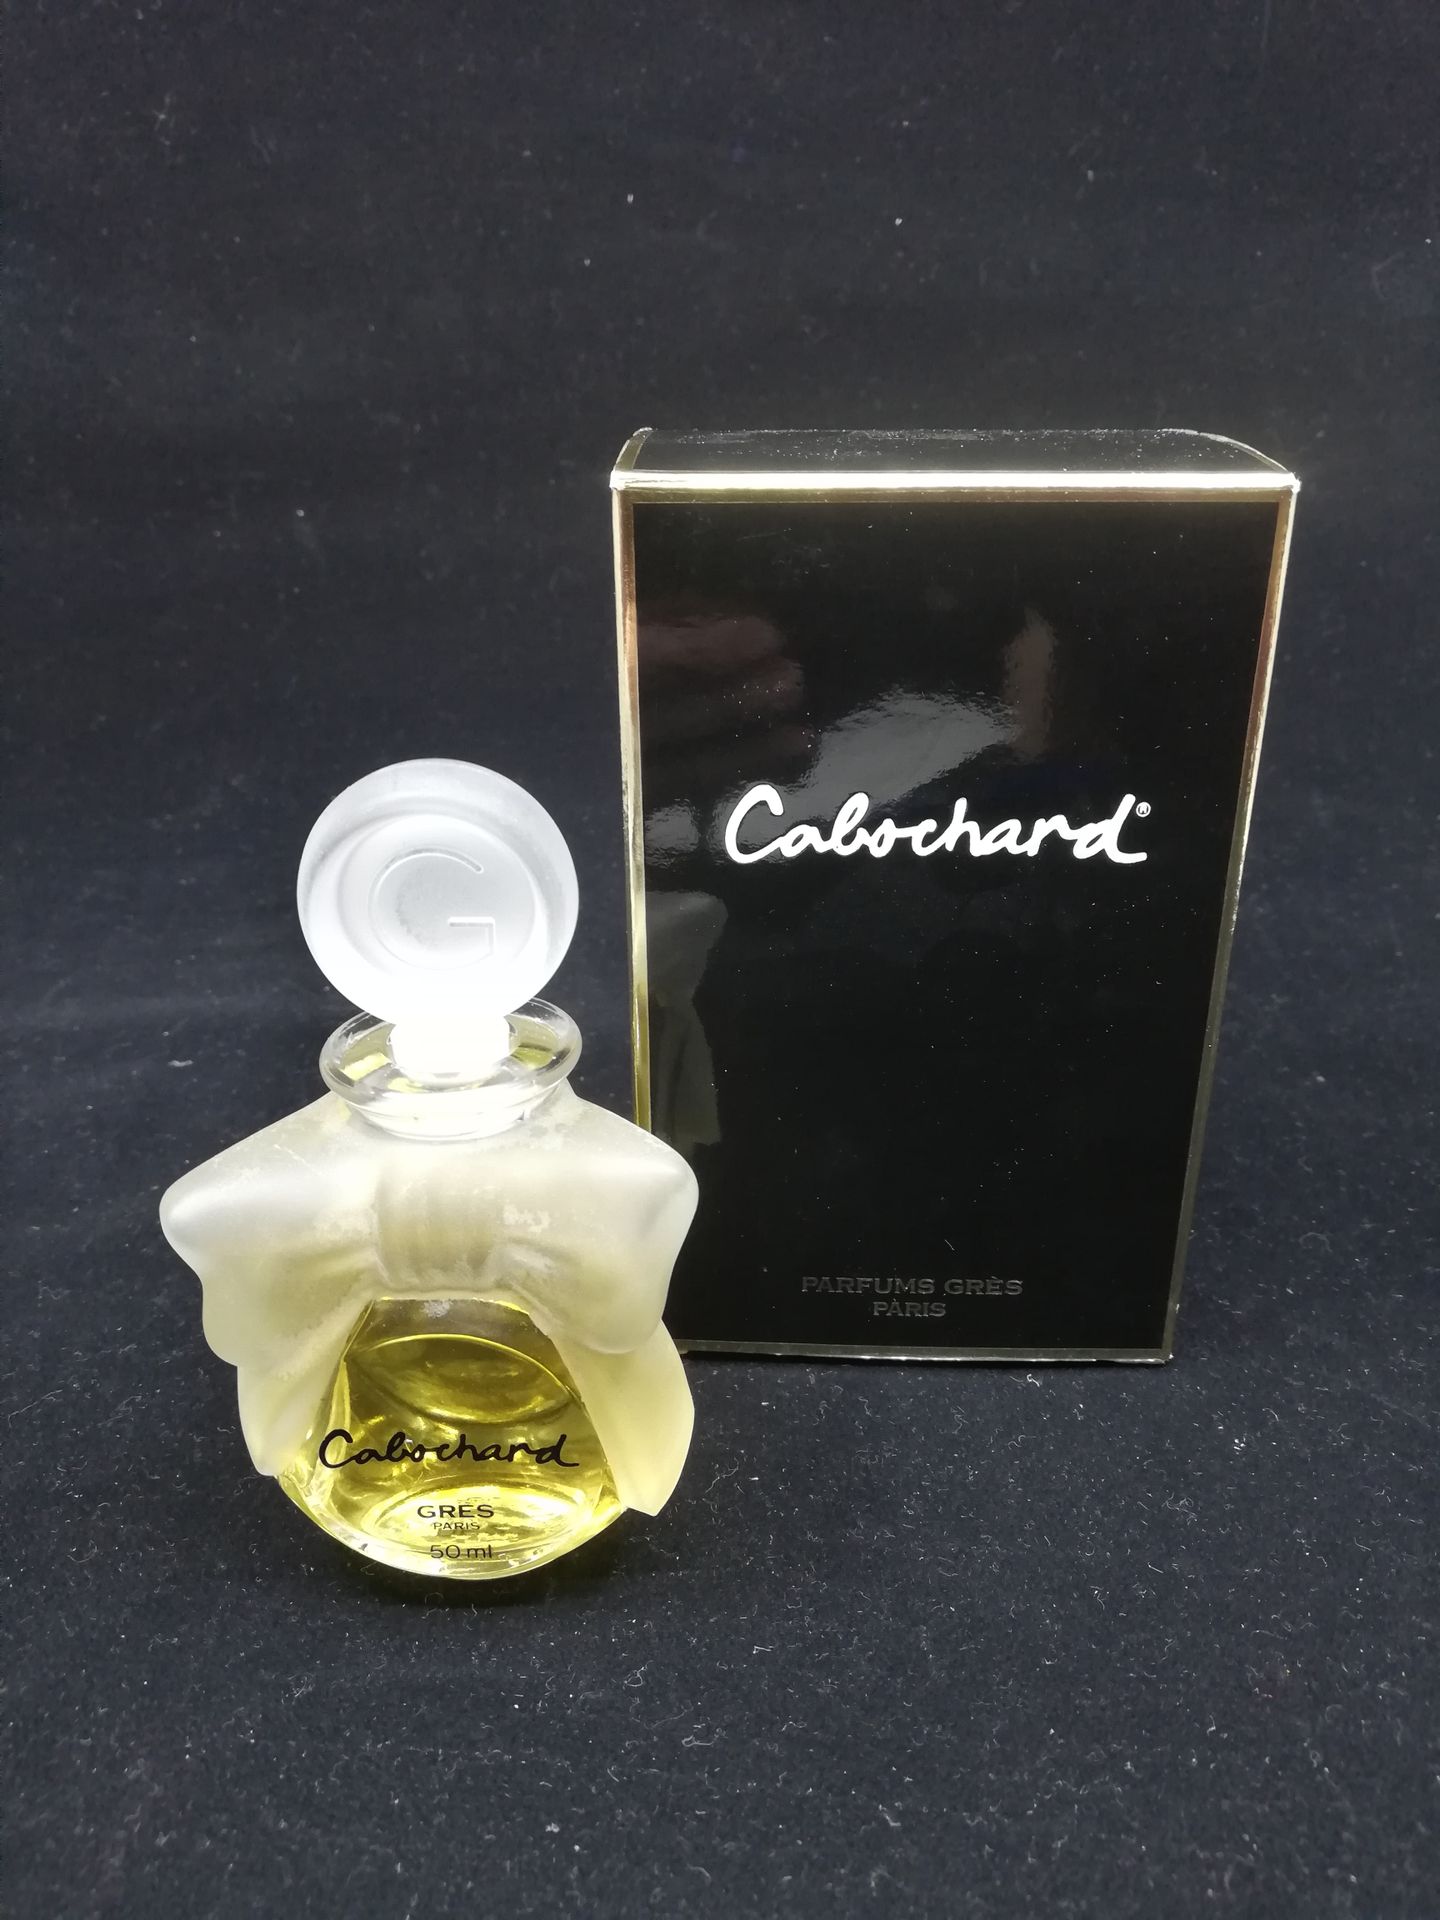 Null Stoneware - "Cabochard" - (1959)

Presented in its black cardboard case, bo&hellip;